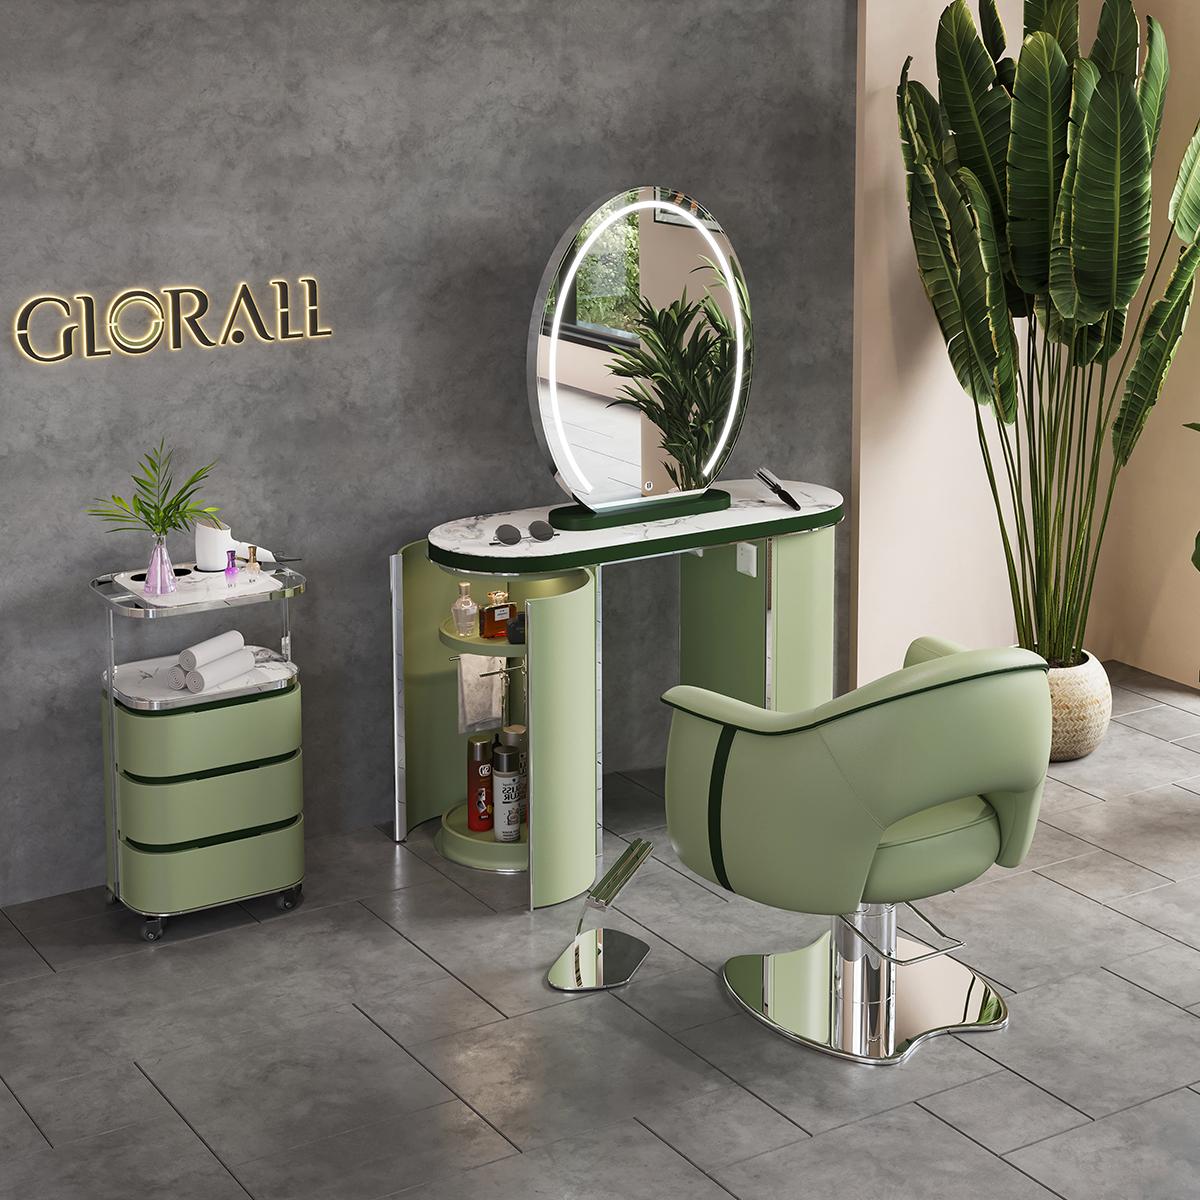 Glorall green salon mirror station for hair salon beauty makeup studio (2)